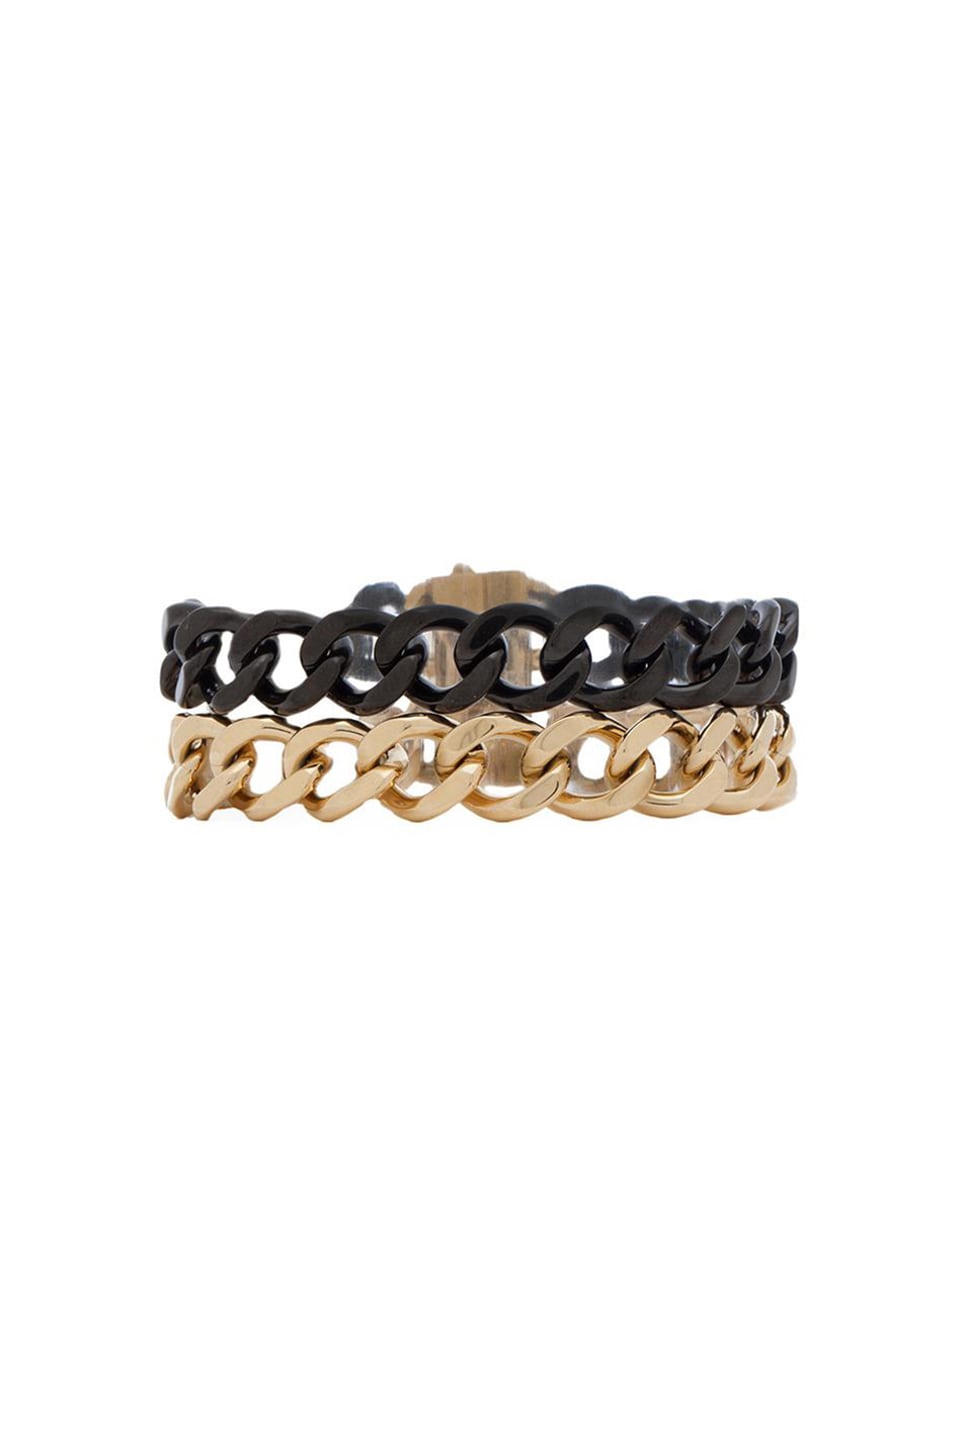 Michael Kors Chain Wrap Bracelet in Two Tone | REVOLVE